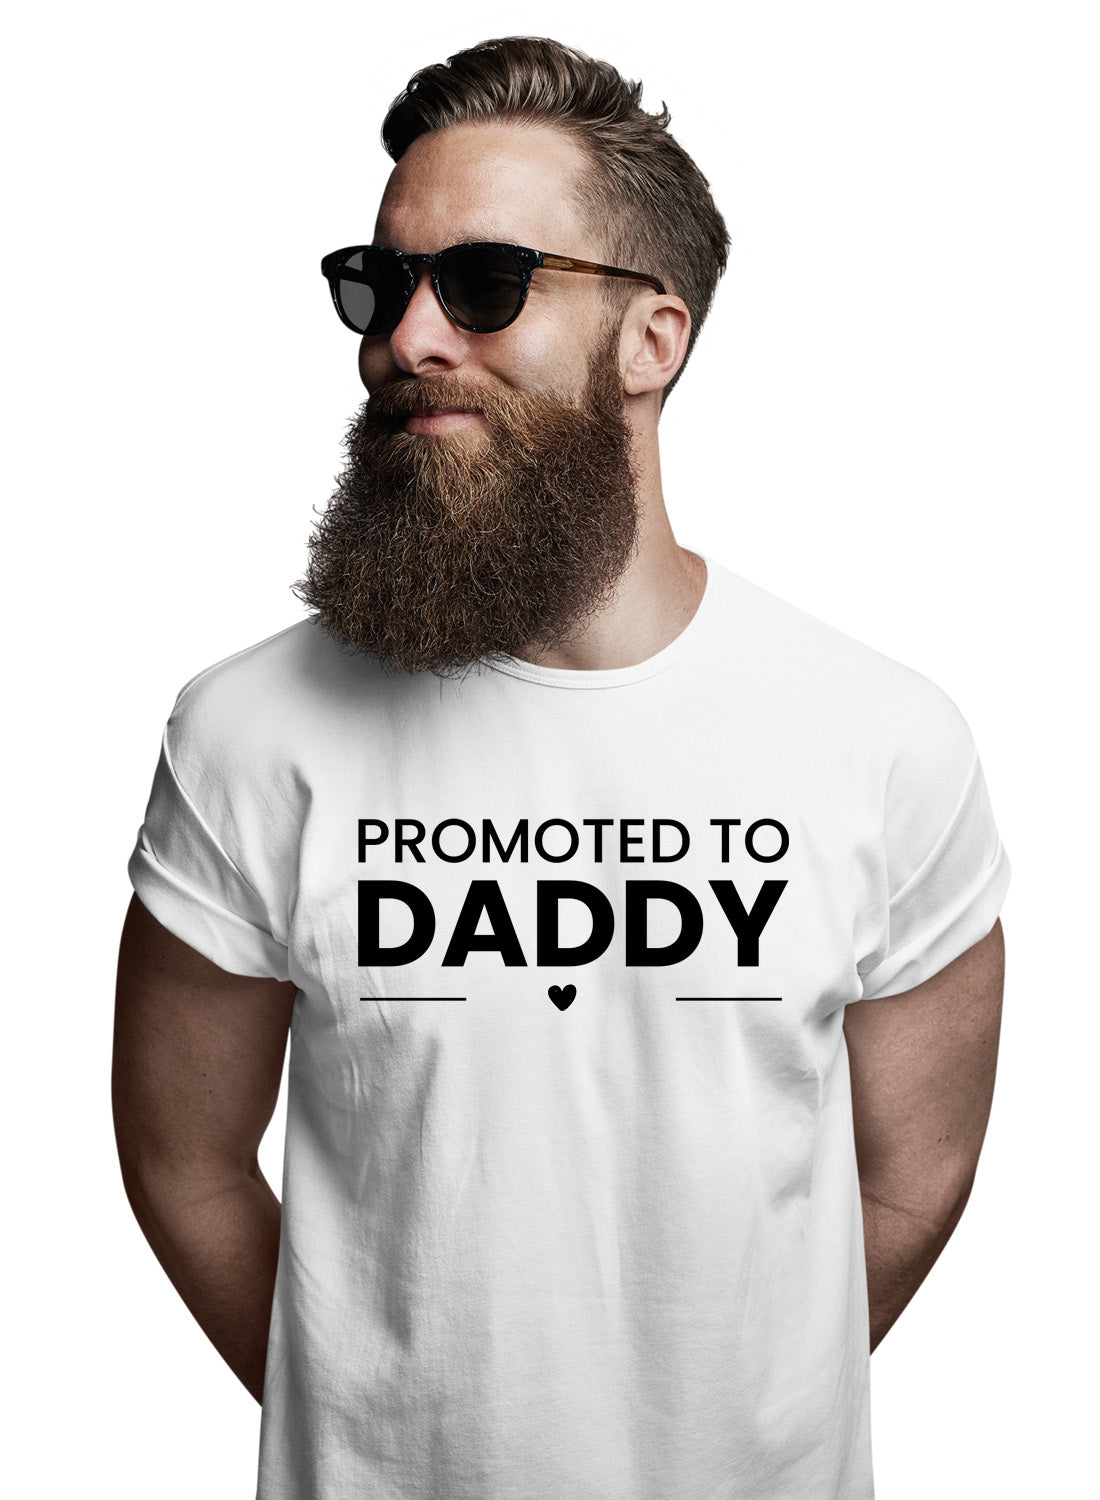 Beloved Dad - Men's Printed Tshirt for Father